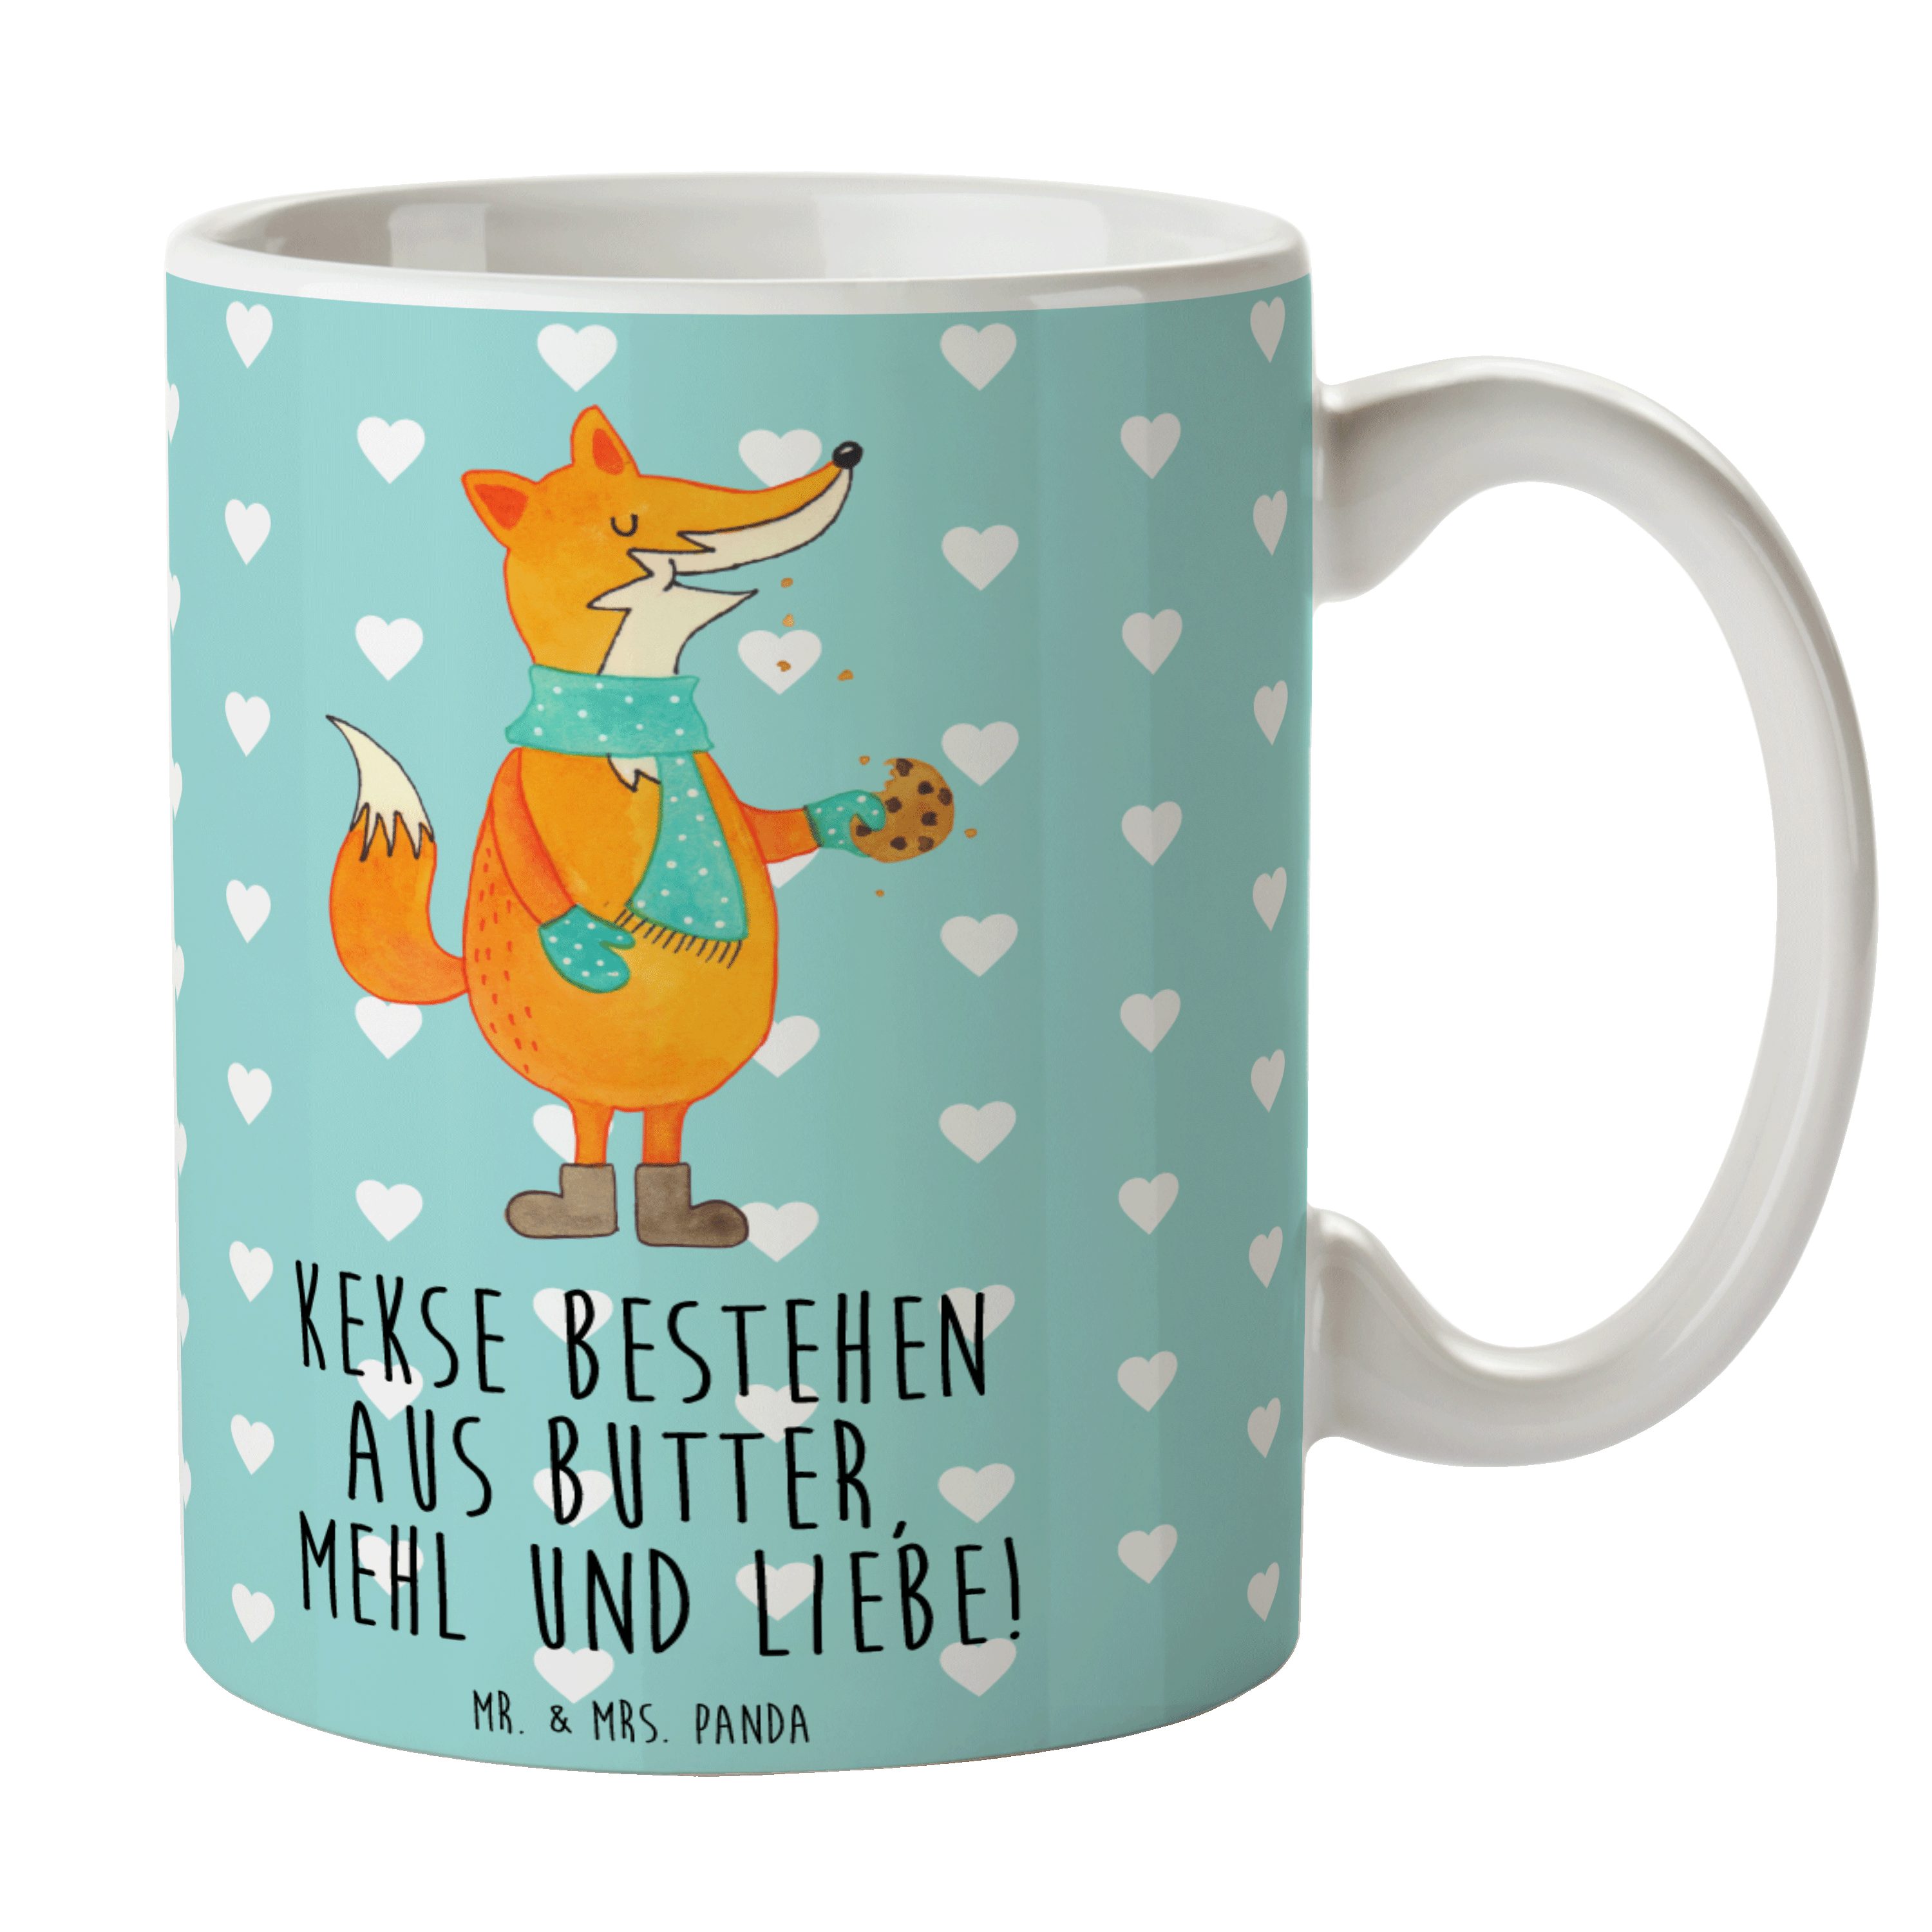 Mr. & Mrs. Panda Tasse Fuchs Keks - Türkis Pastell - Geschenk, Becher, Keramiktasse, Tasse M, Keramik